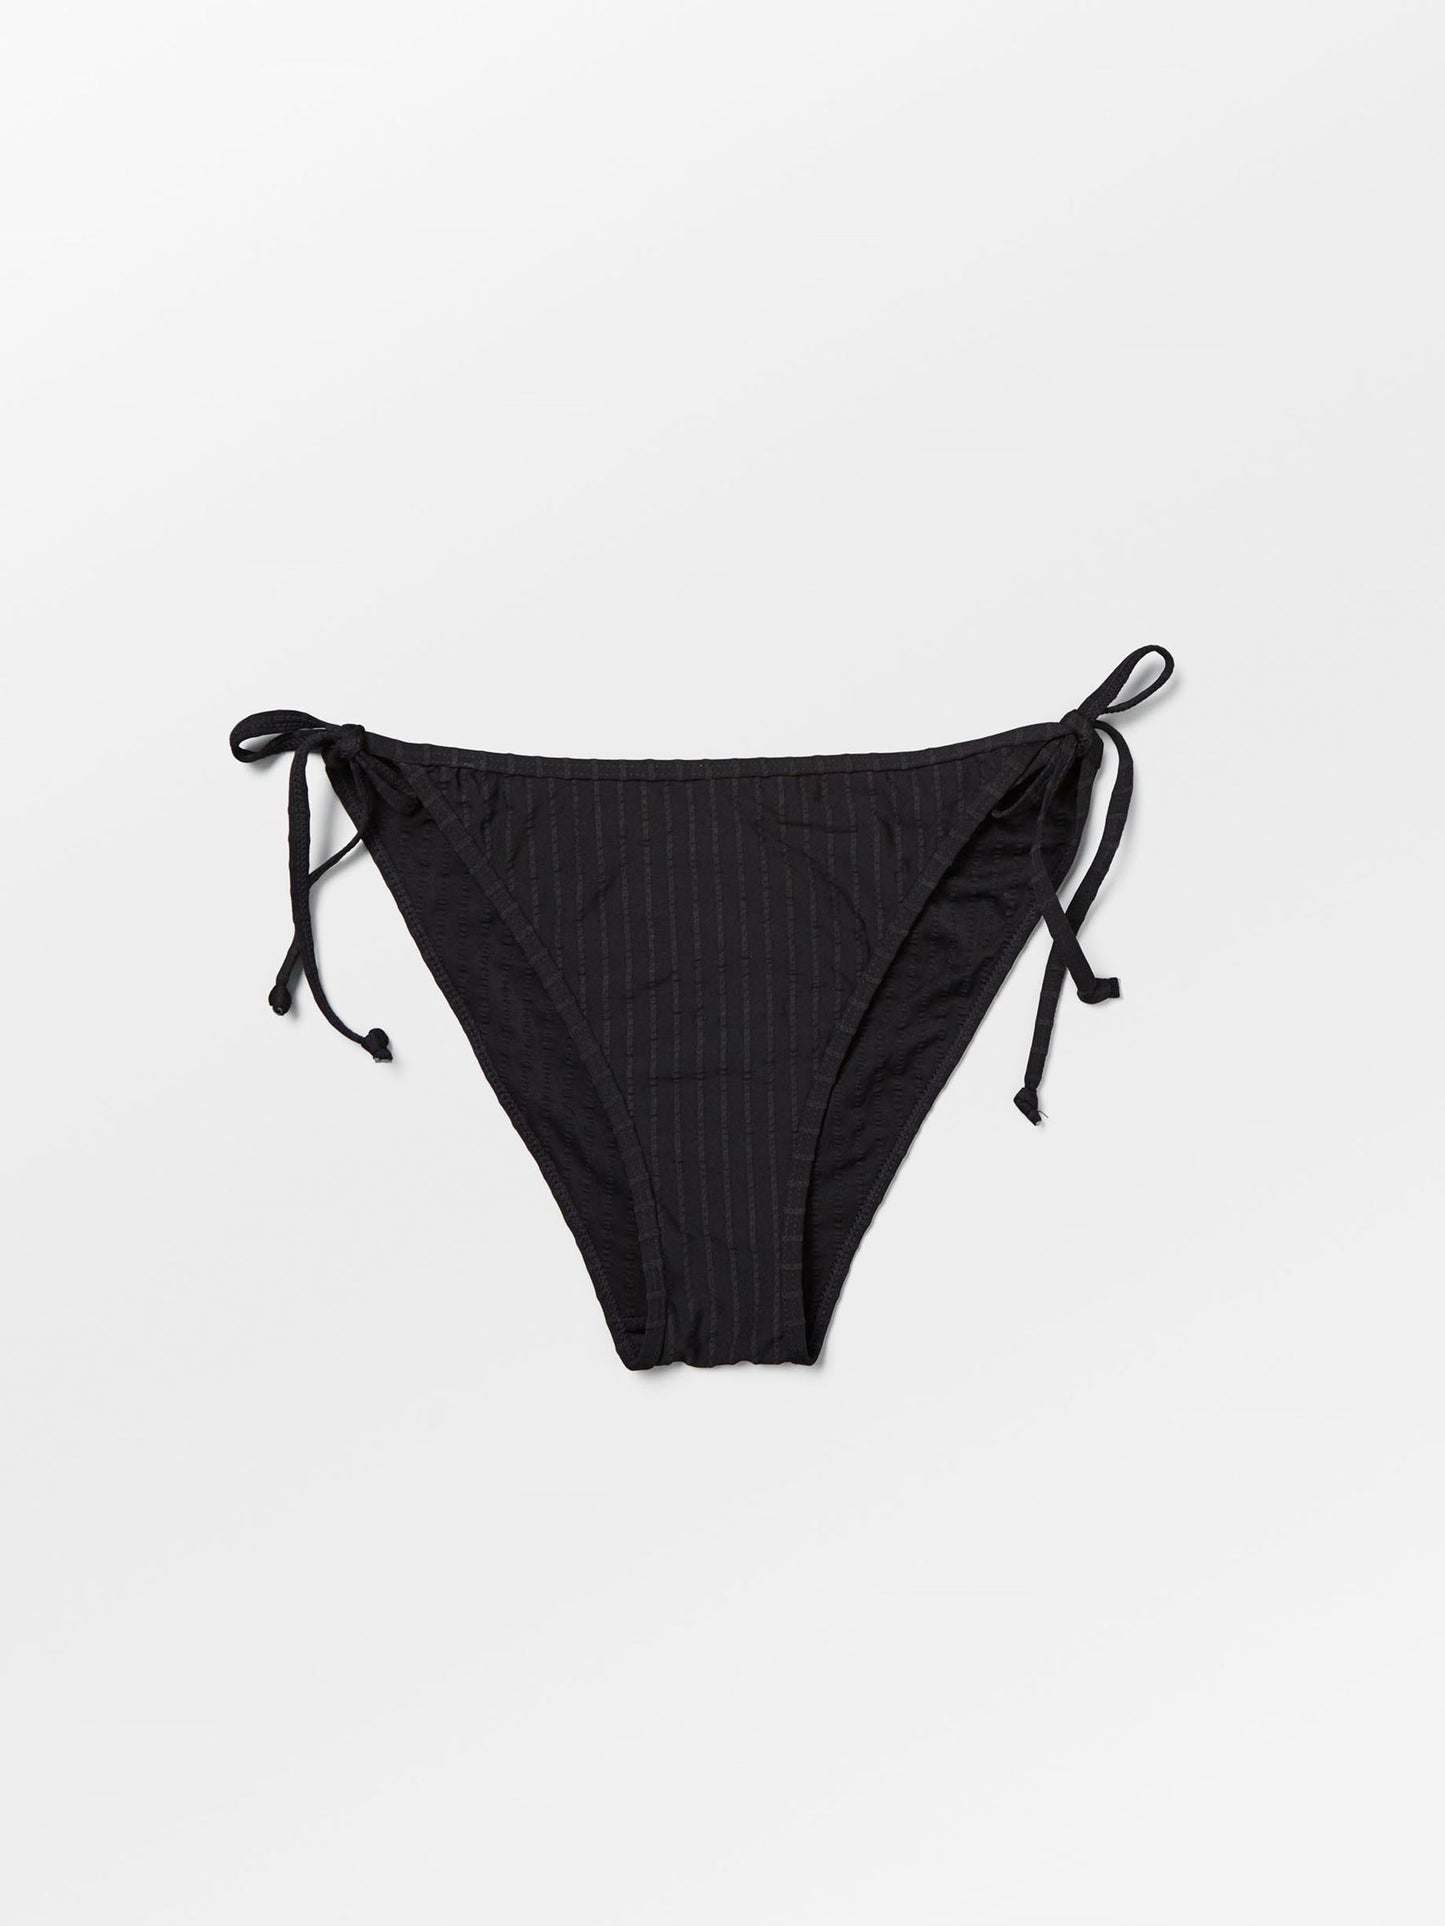 Becksöndergaard, Solid Baila Bikini Tanga - Black, archive, archive, sale, sale